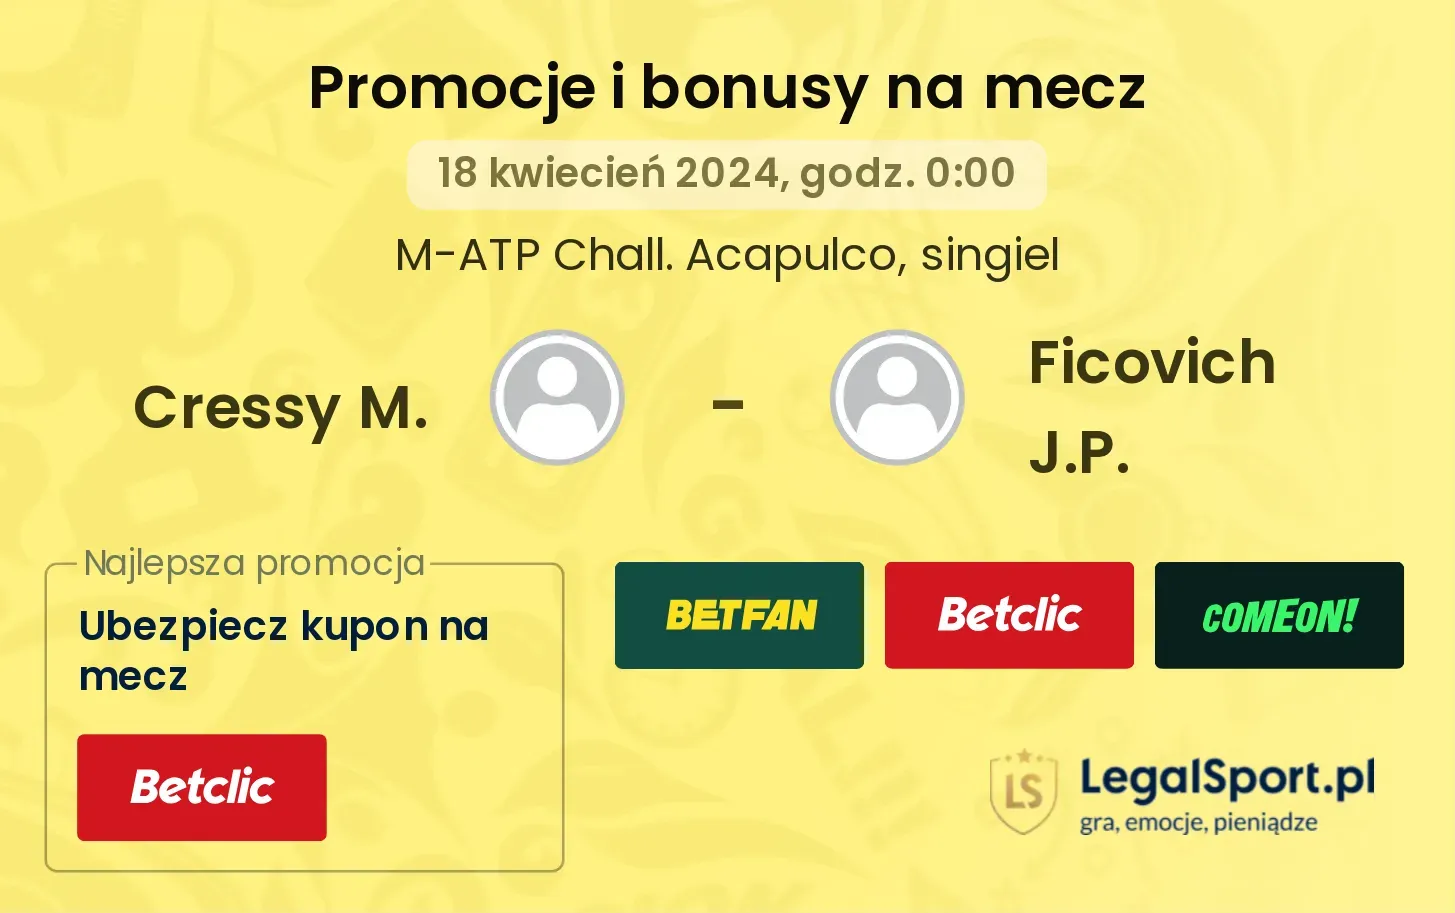 Cressy M. - Ficovich J.P. promocje bonusy na mecz